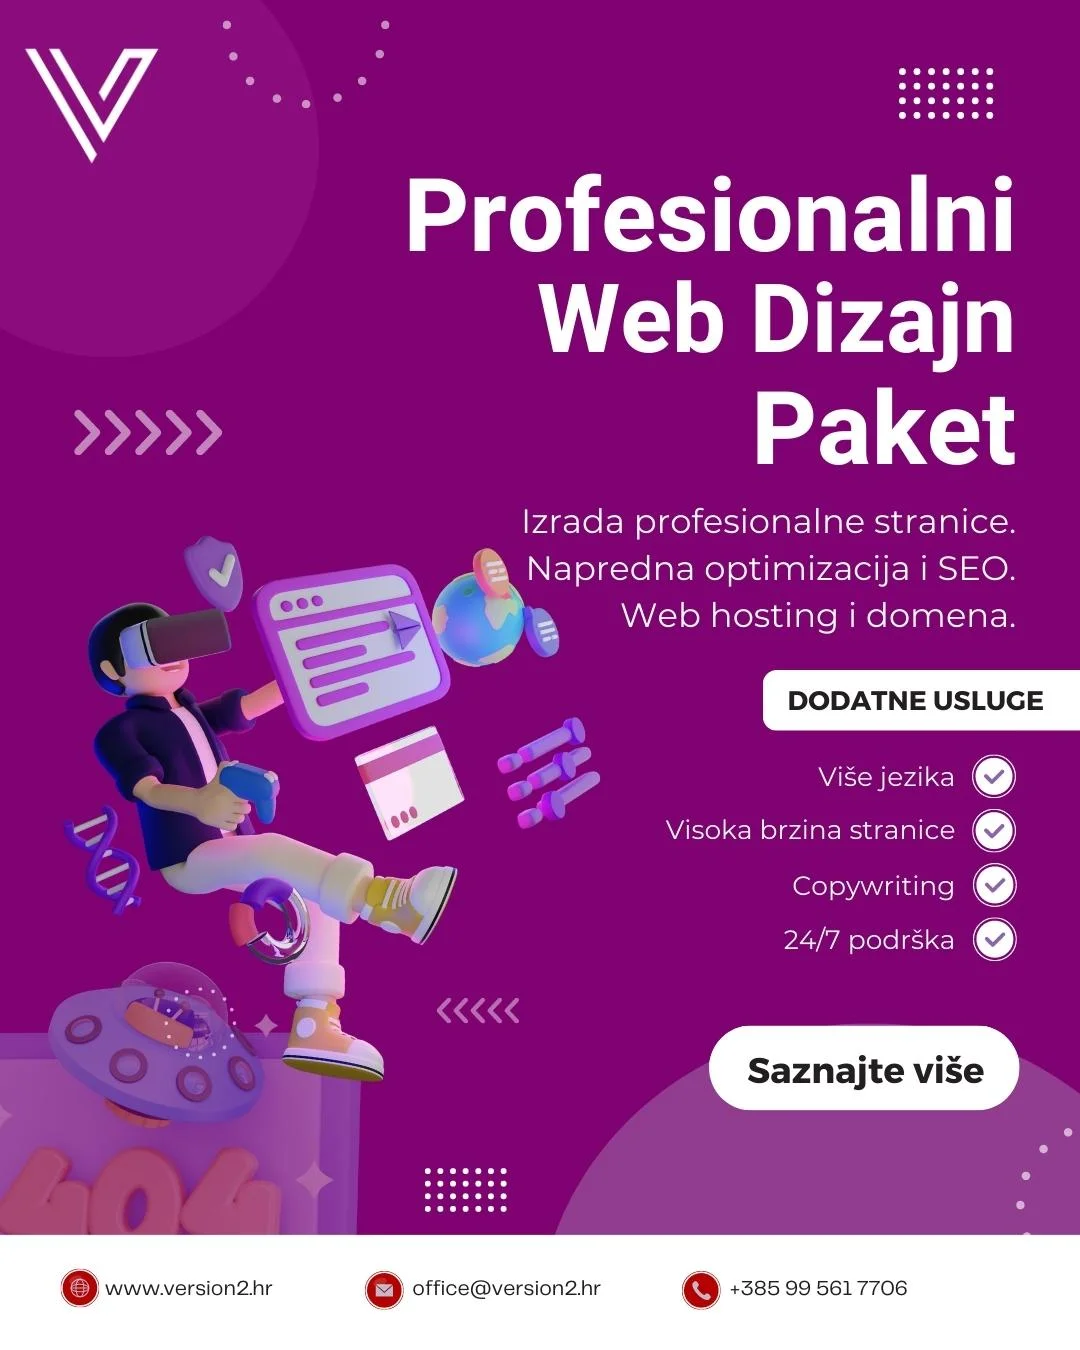 Version2, Agencija za Digitalni Marketing, Web Dizajn, Društvene Mreže, Plaćeni Oglasi, SEO, Copywriting, Version 2, Version2 Zadar